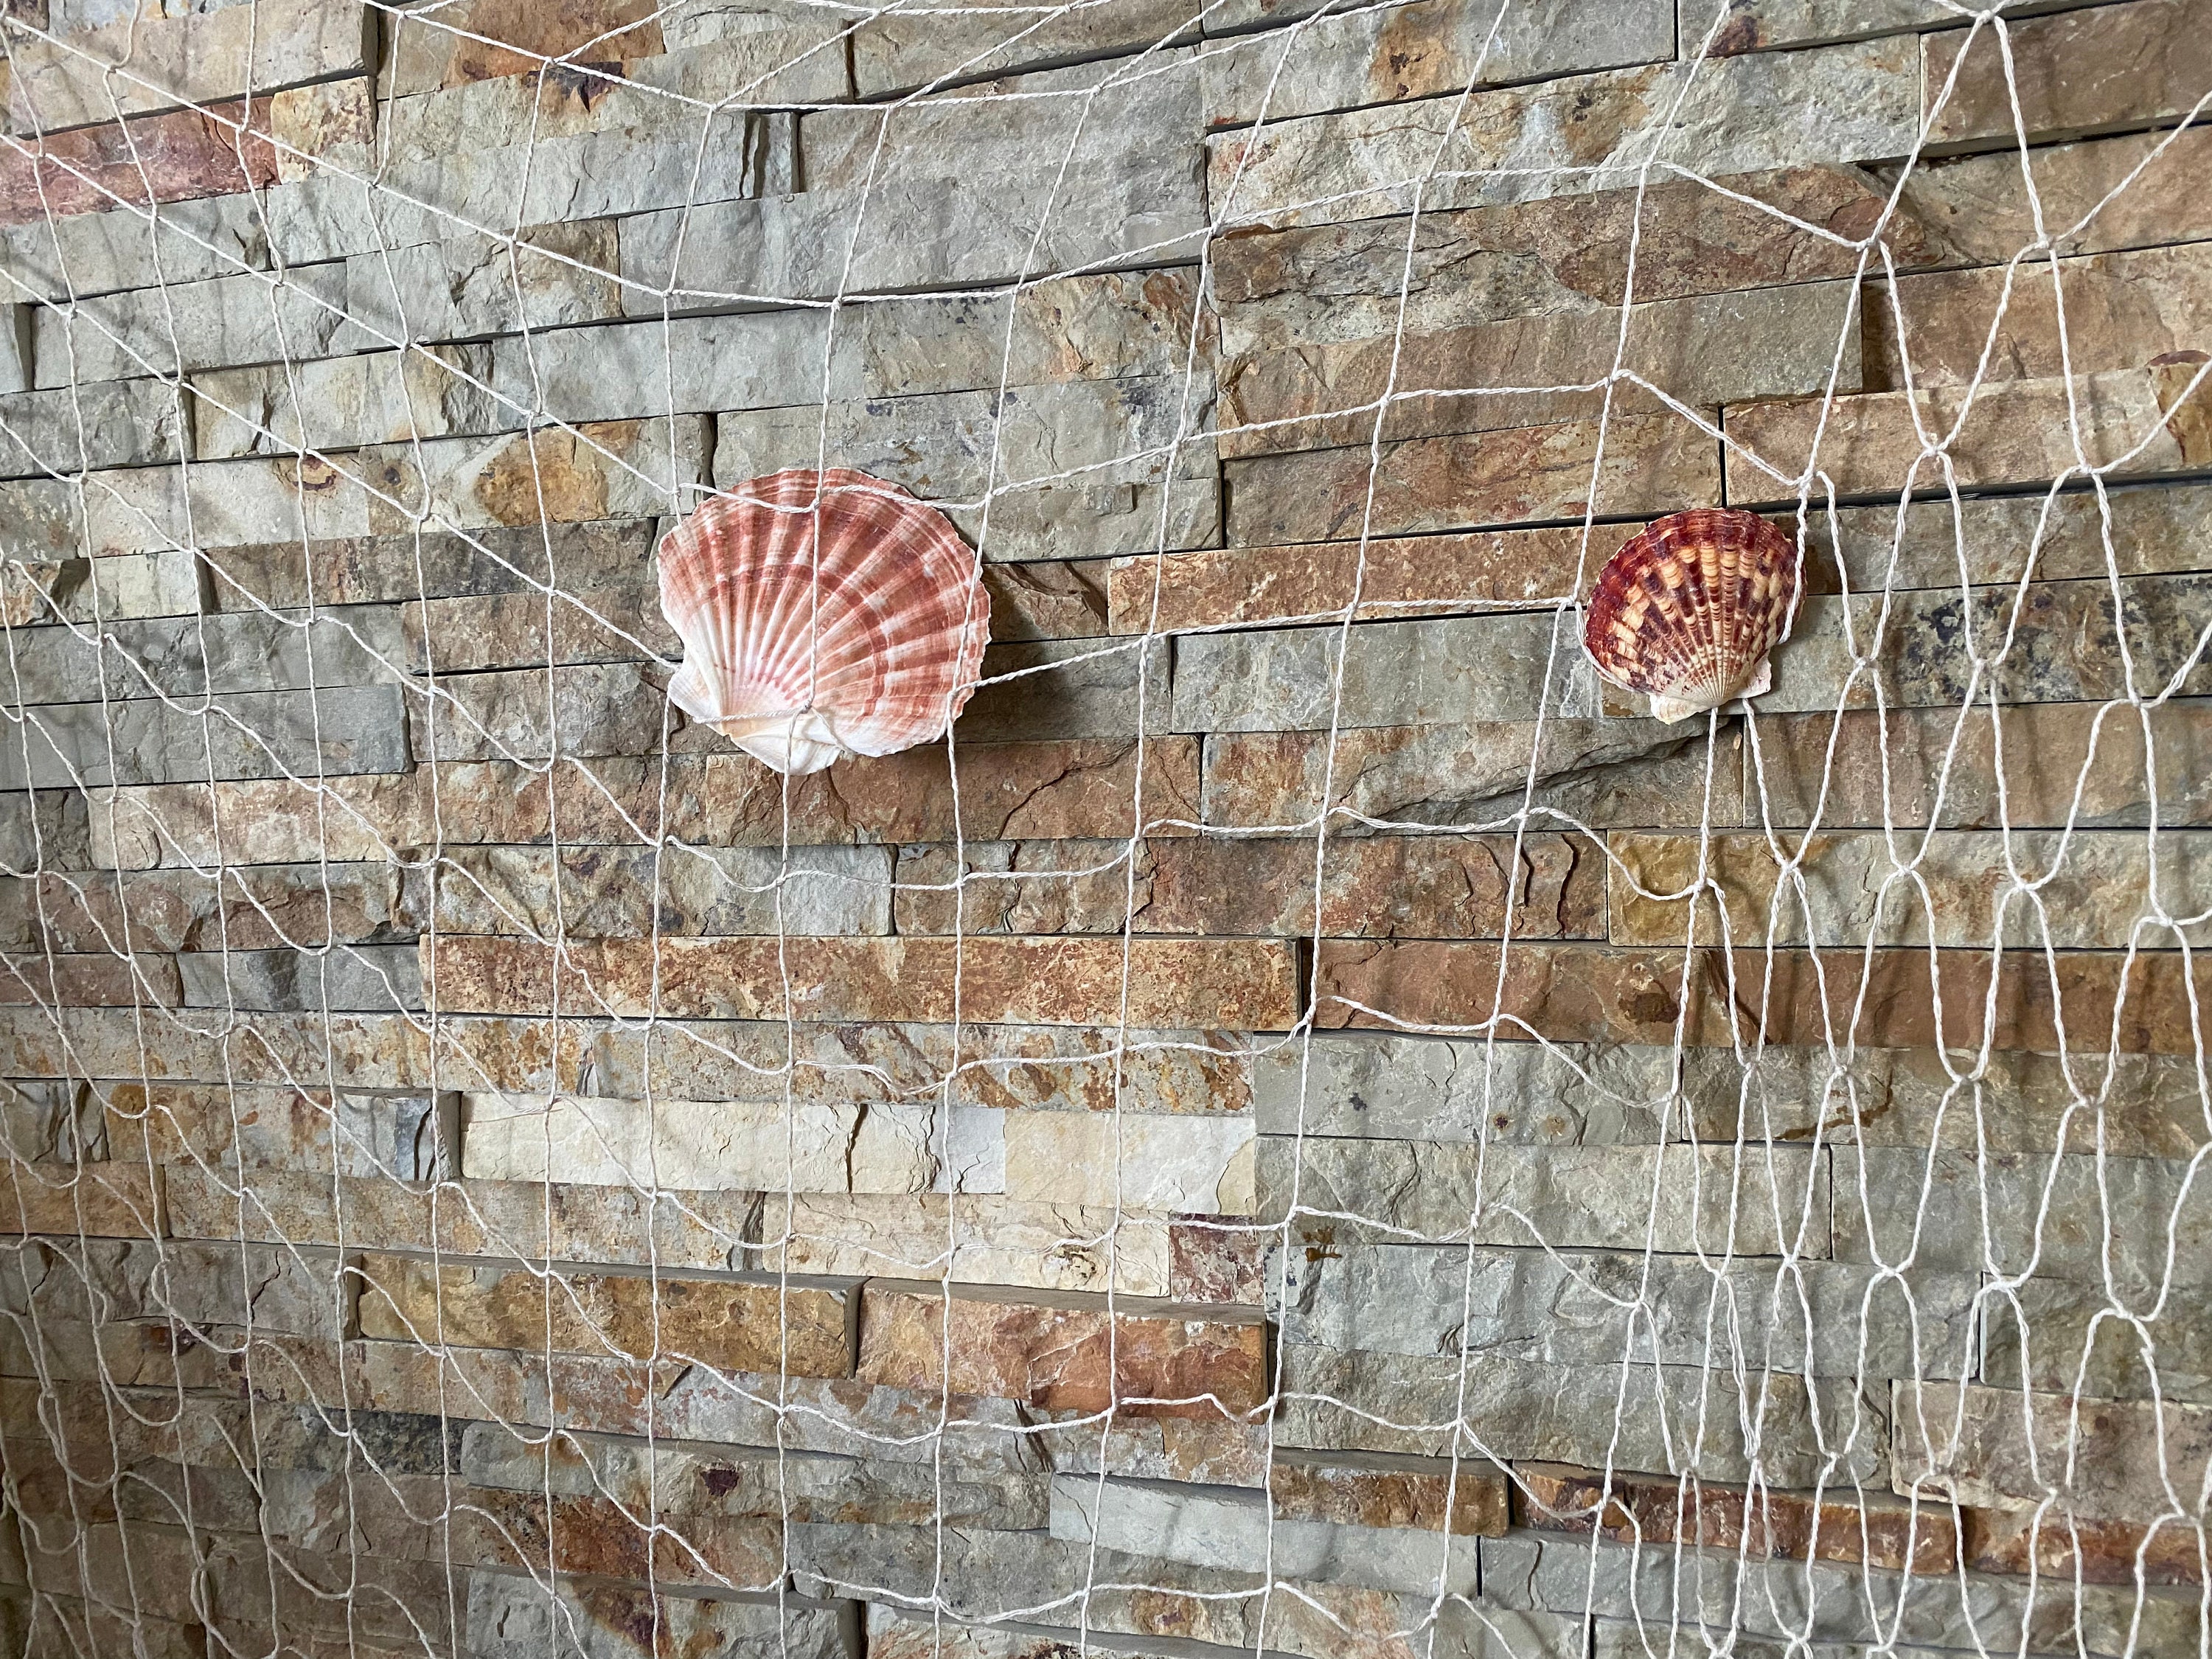 Decorative Fish Net with Shells and Cork - TikiKev